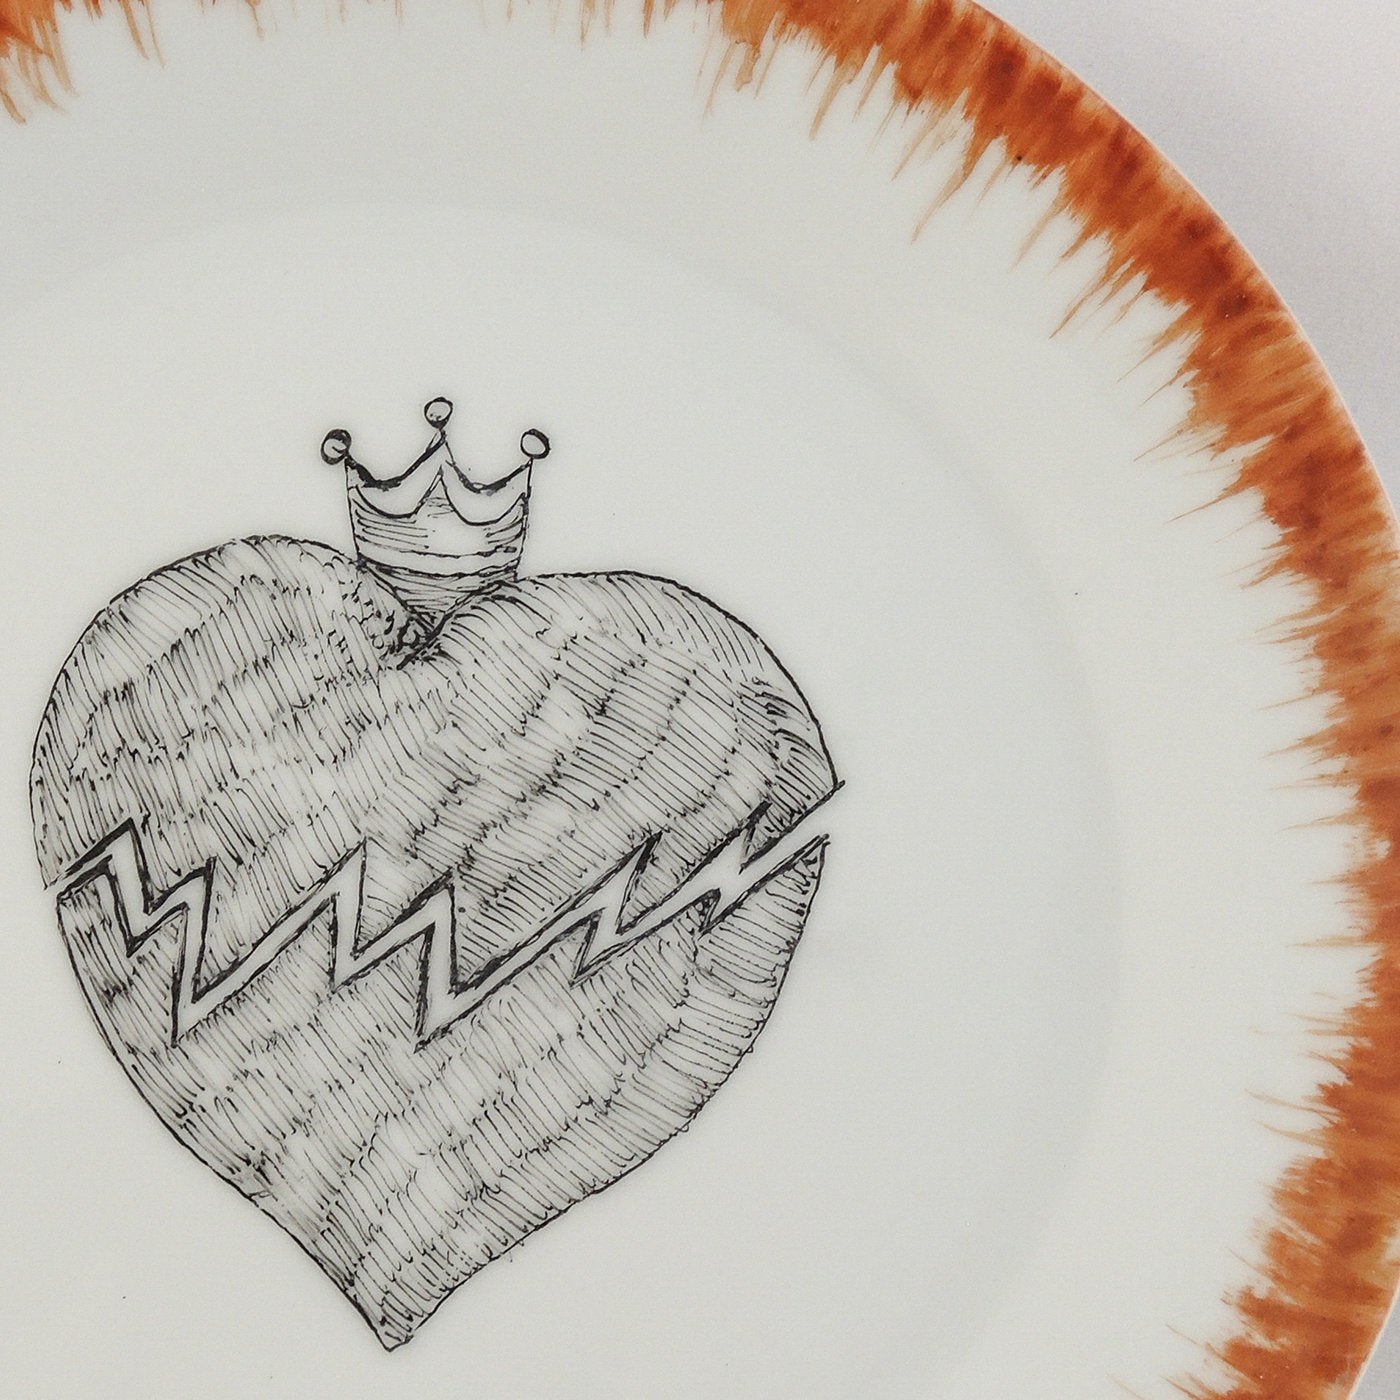 Broken Heart Plate - Hearts collection - Alternative view 1